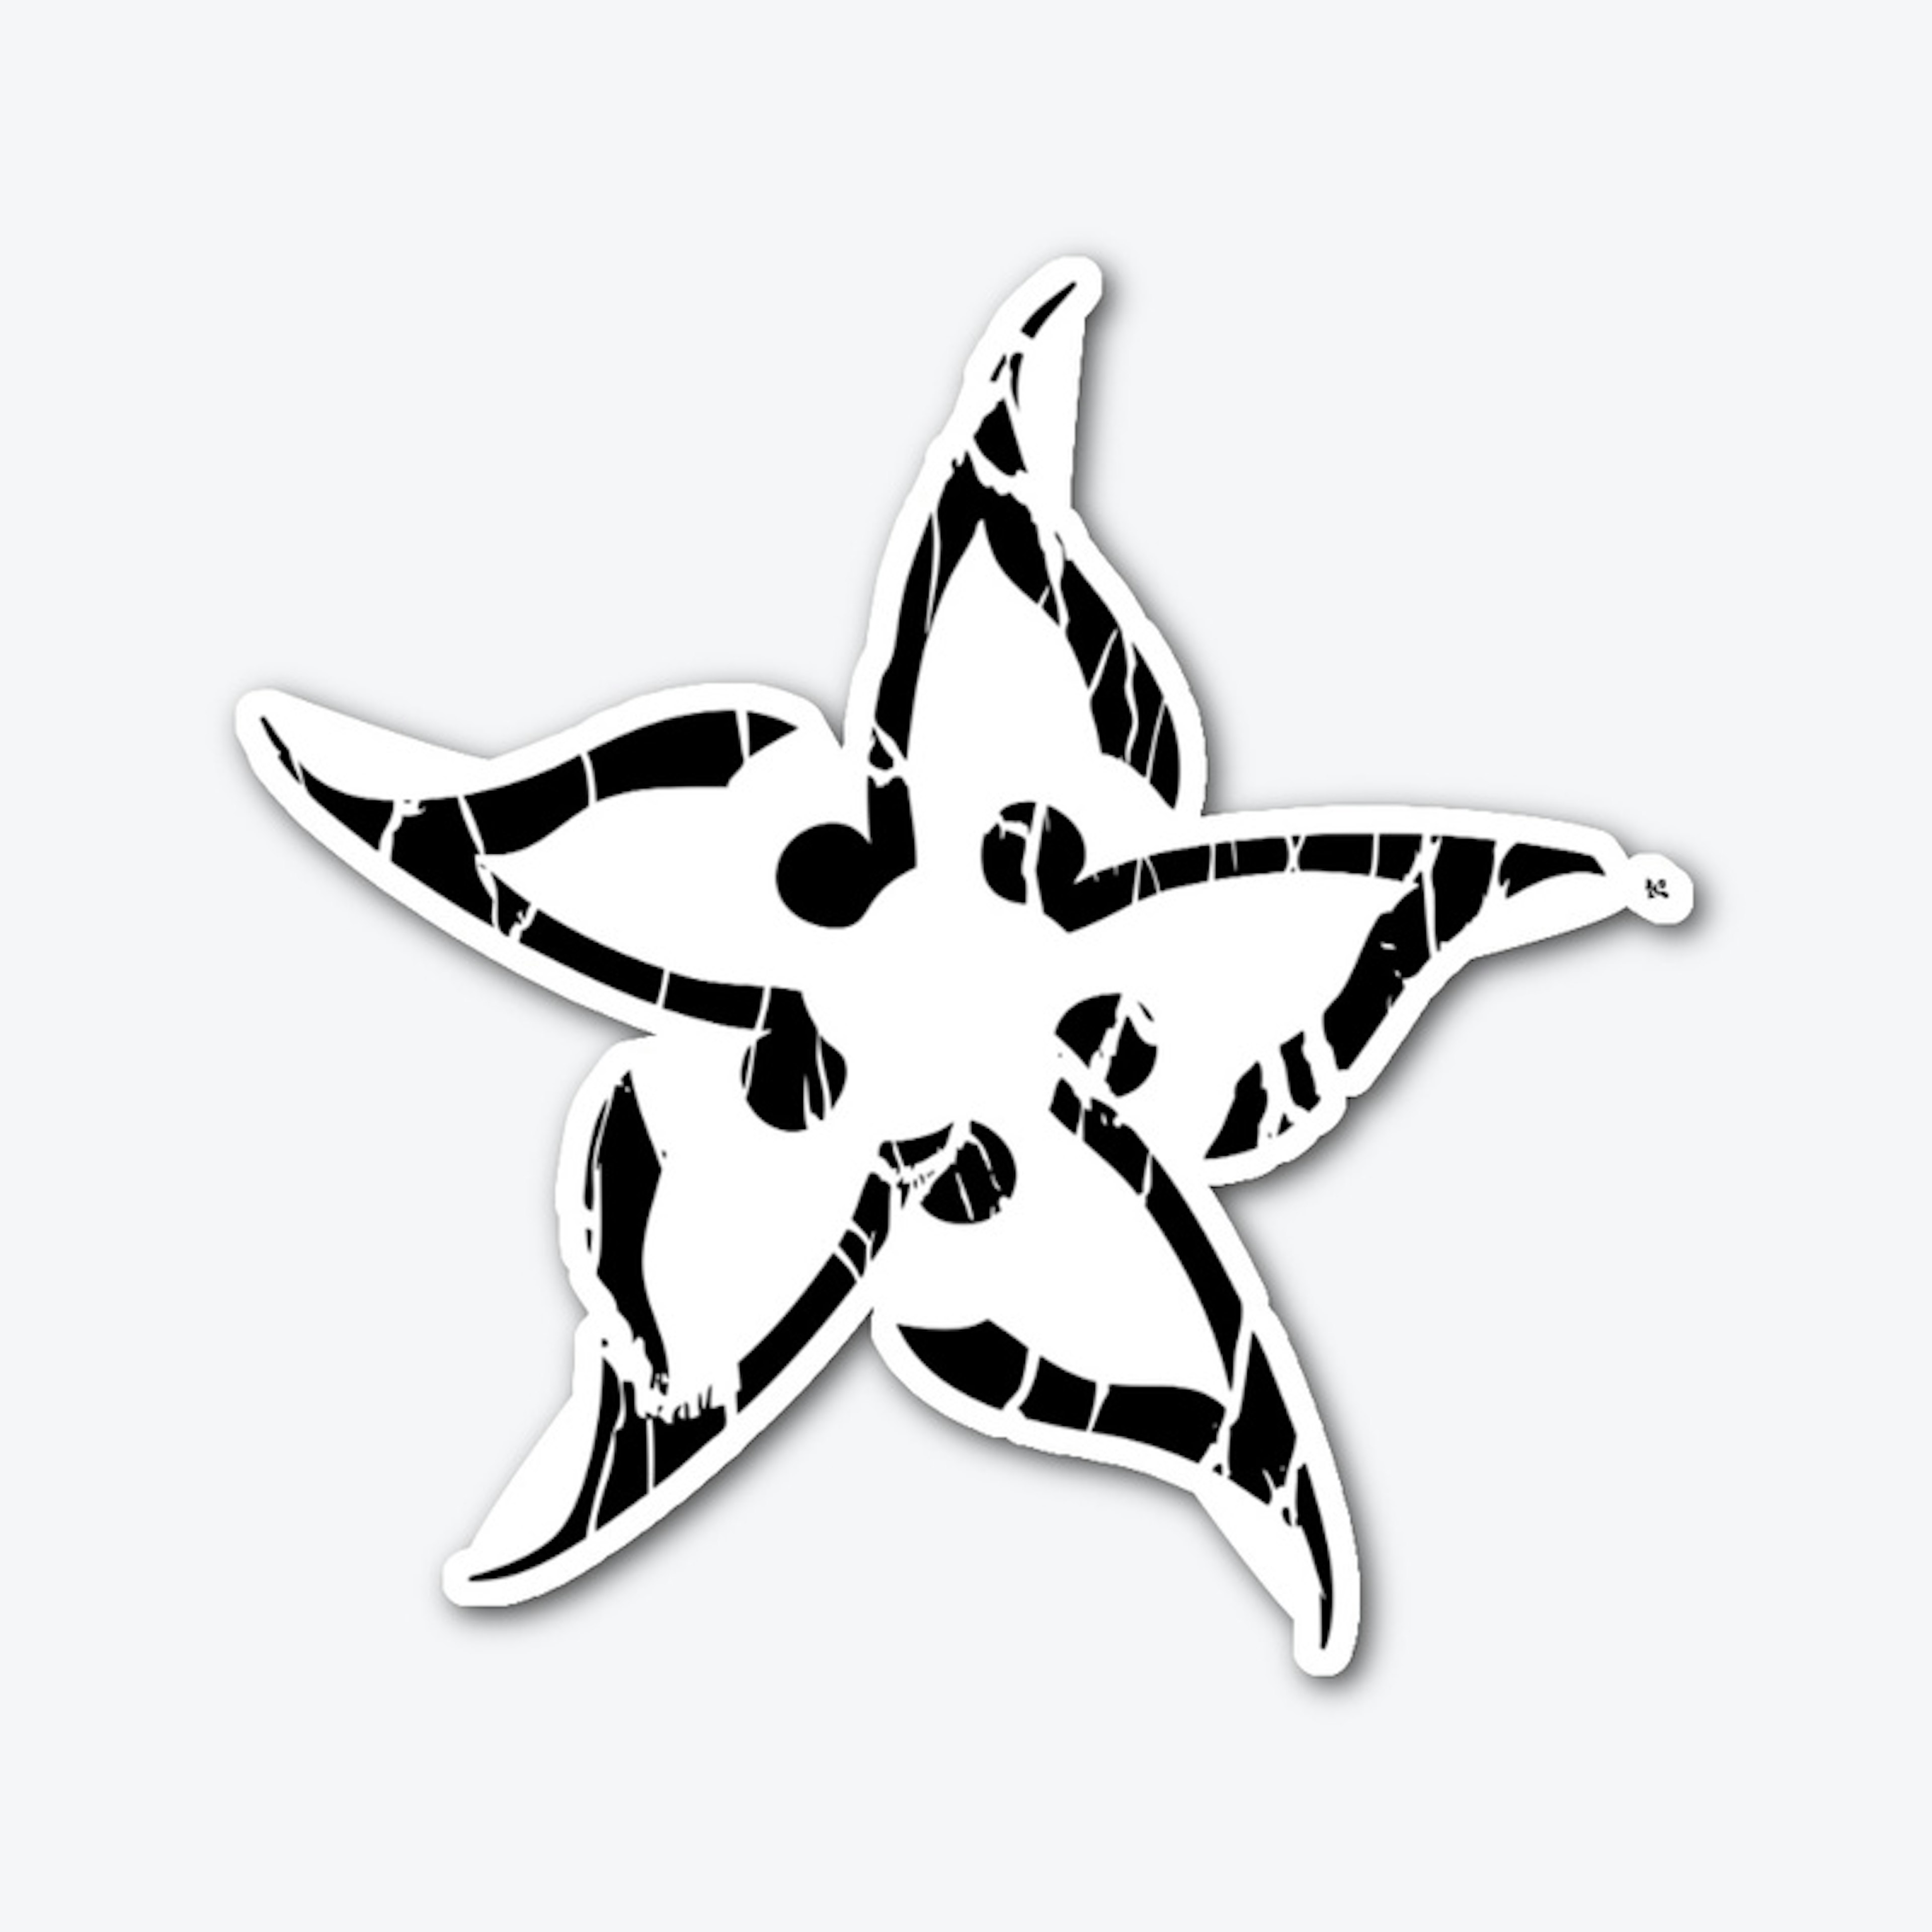 Dave Crum Star Logo